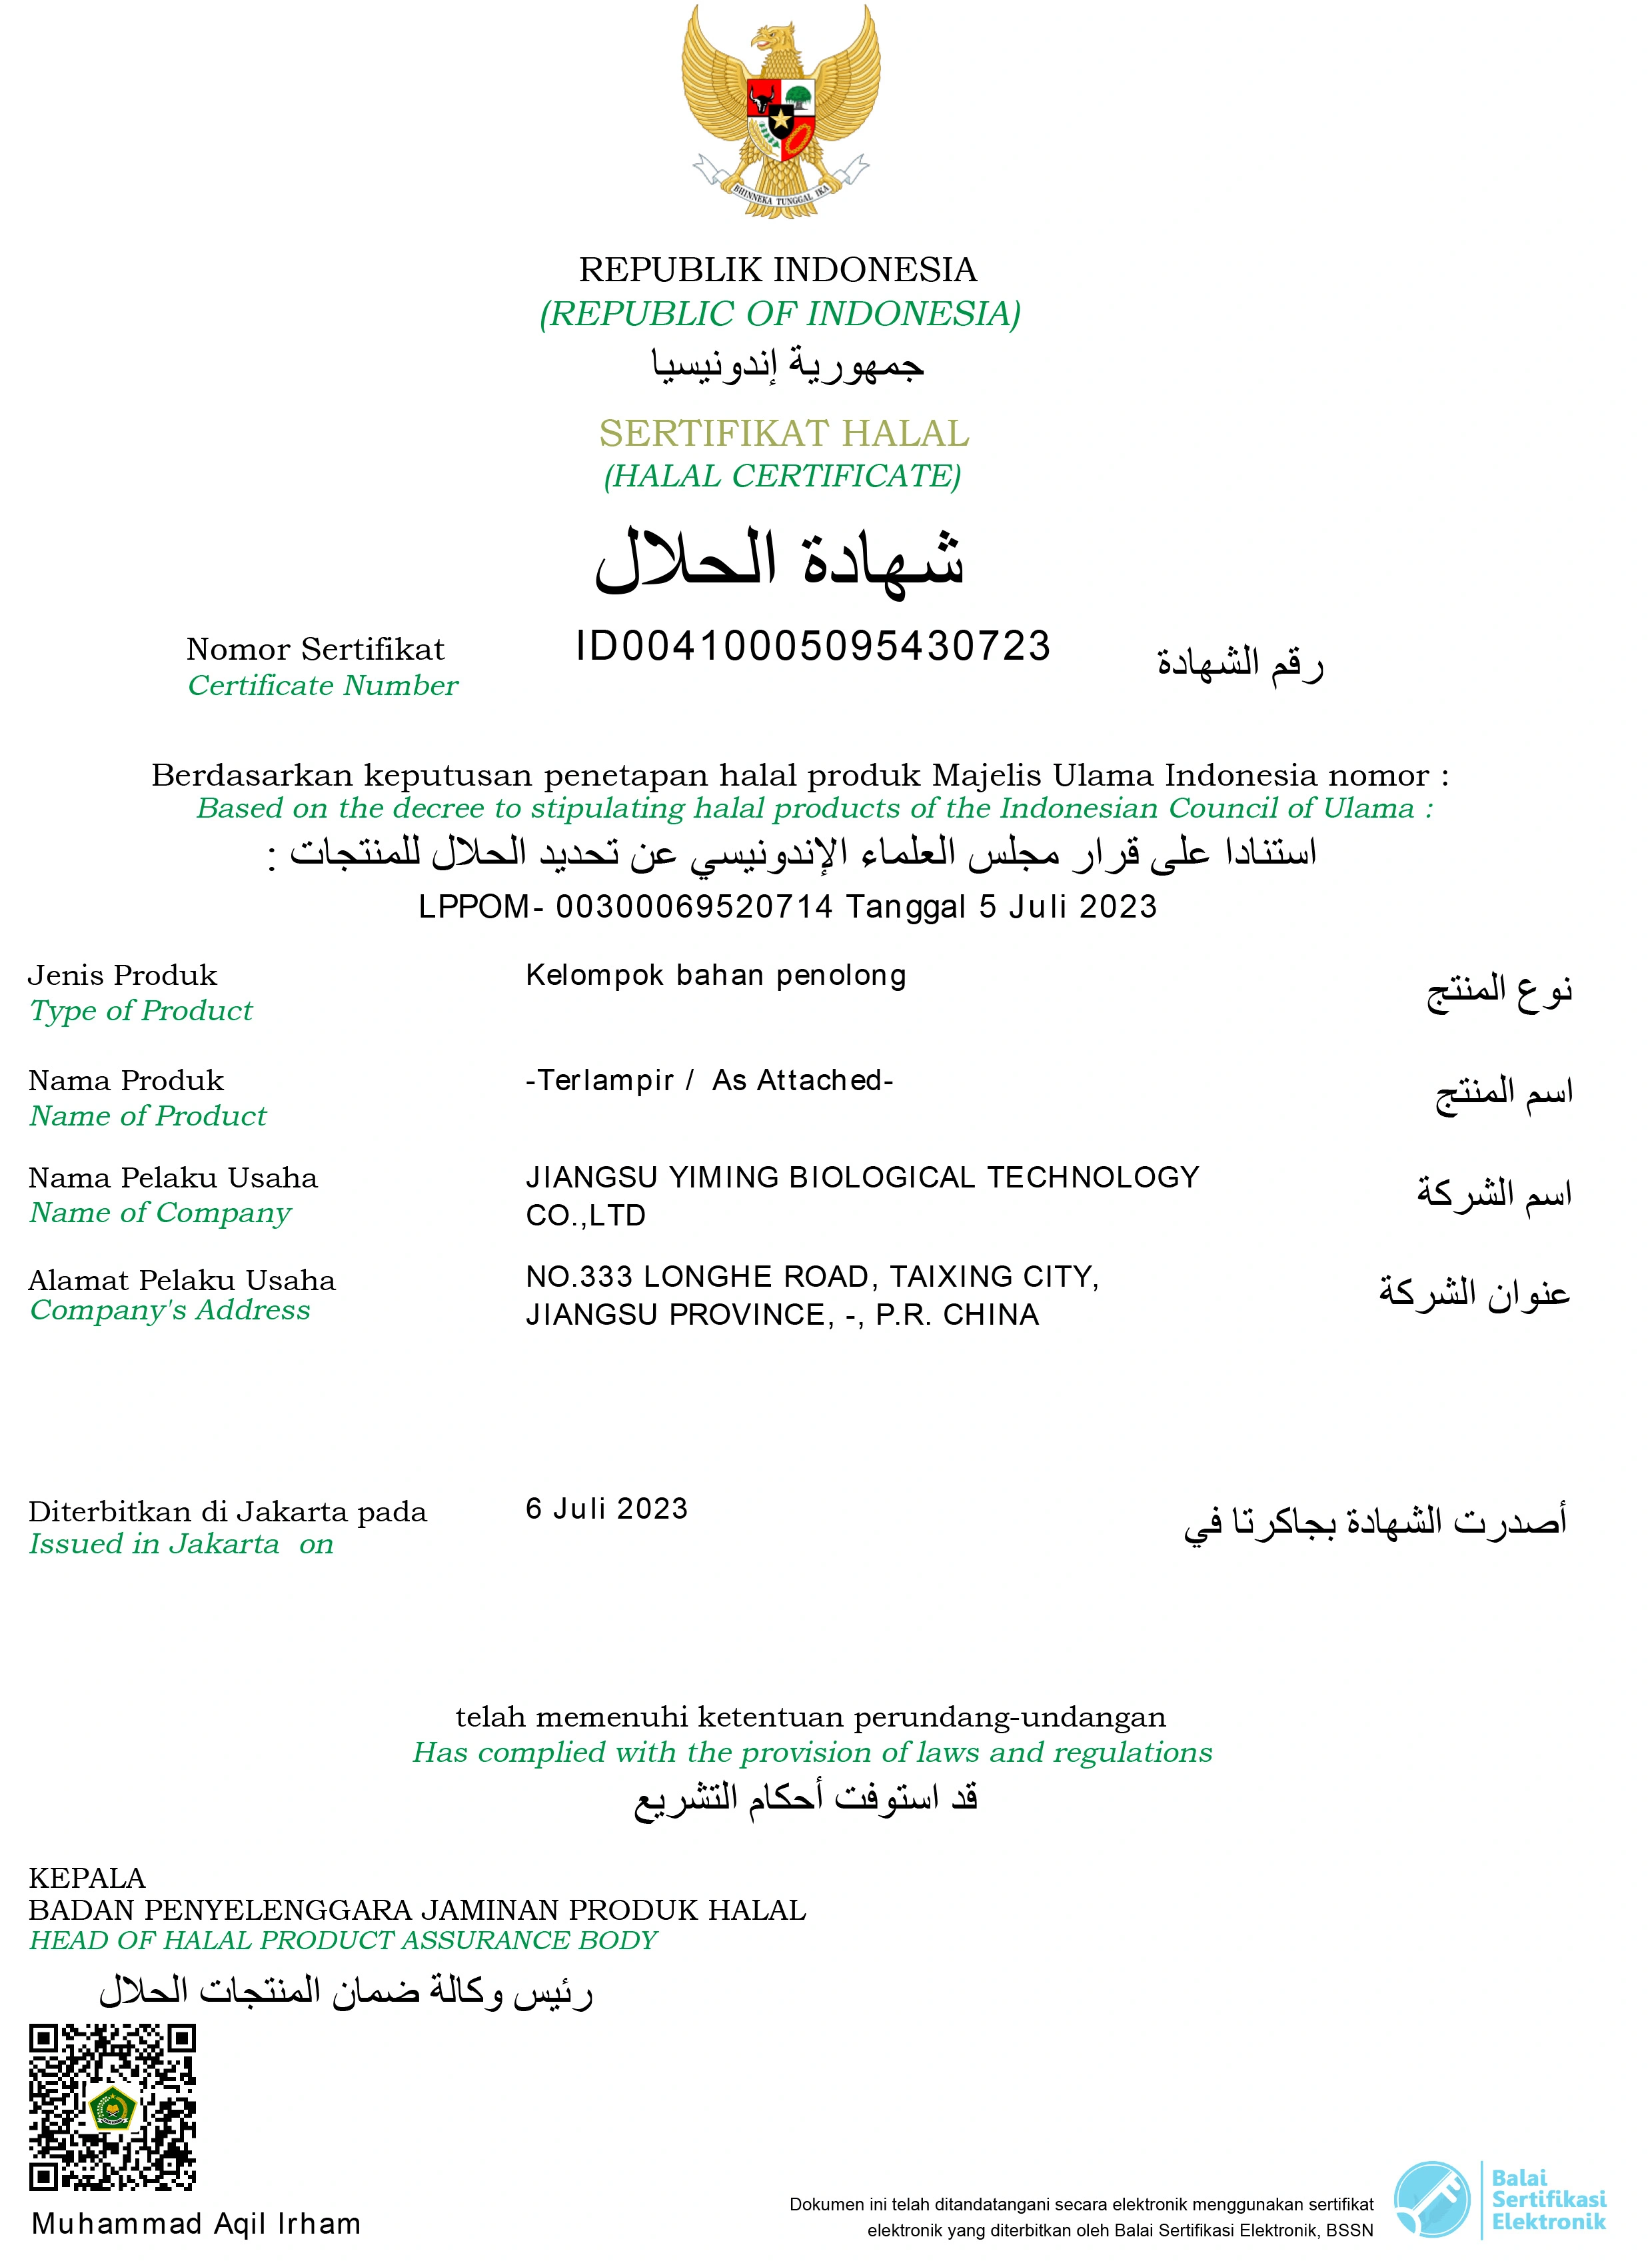 BPJPH-halal Certification (TG, Polylysine)